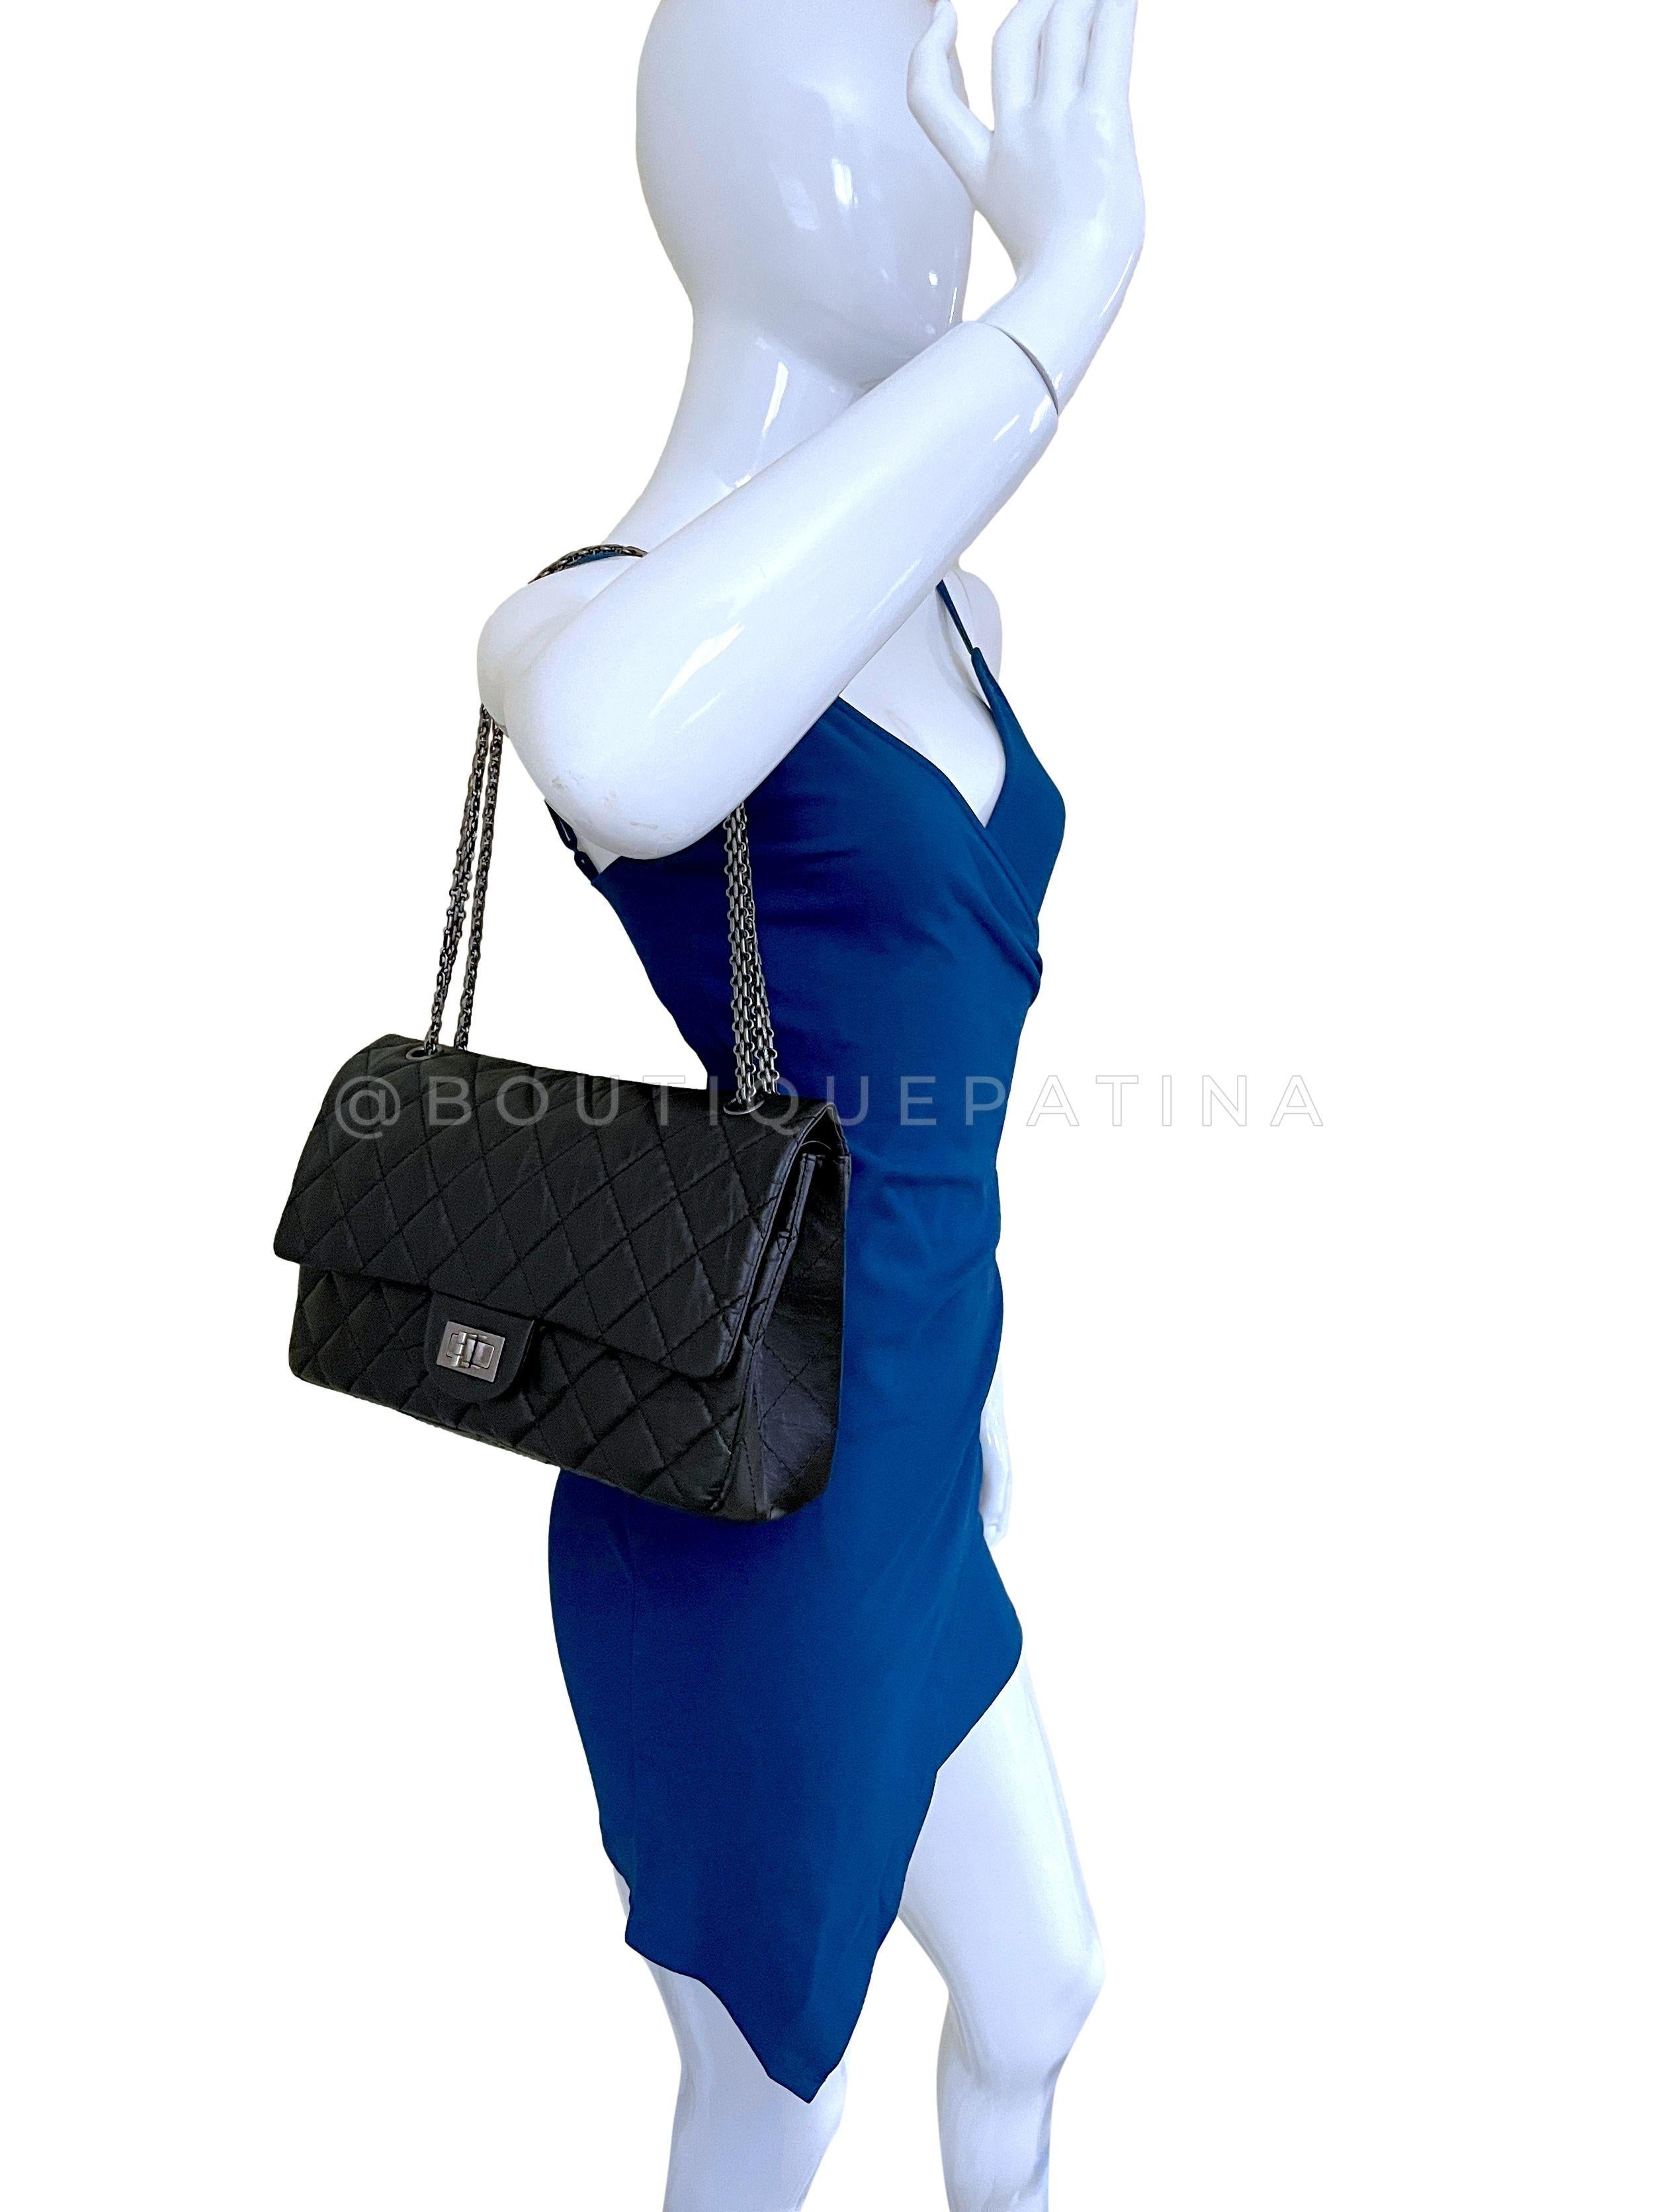 Pristine Chanel Black Aged Calfskin Reissue Large 227 2.55 Flap Bag RHW  66176 For Sale 9